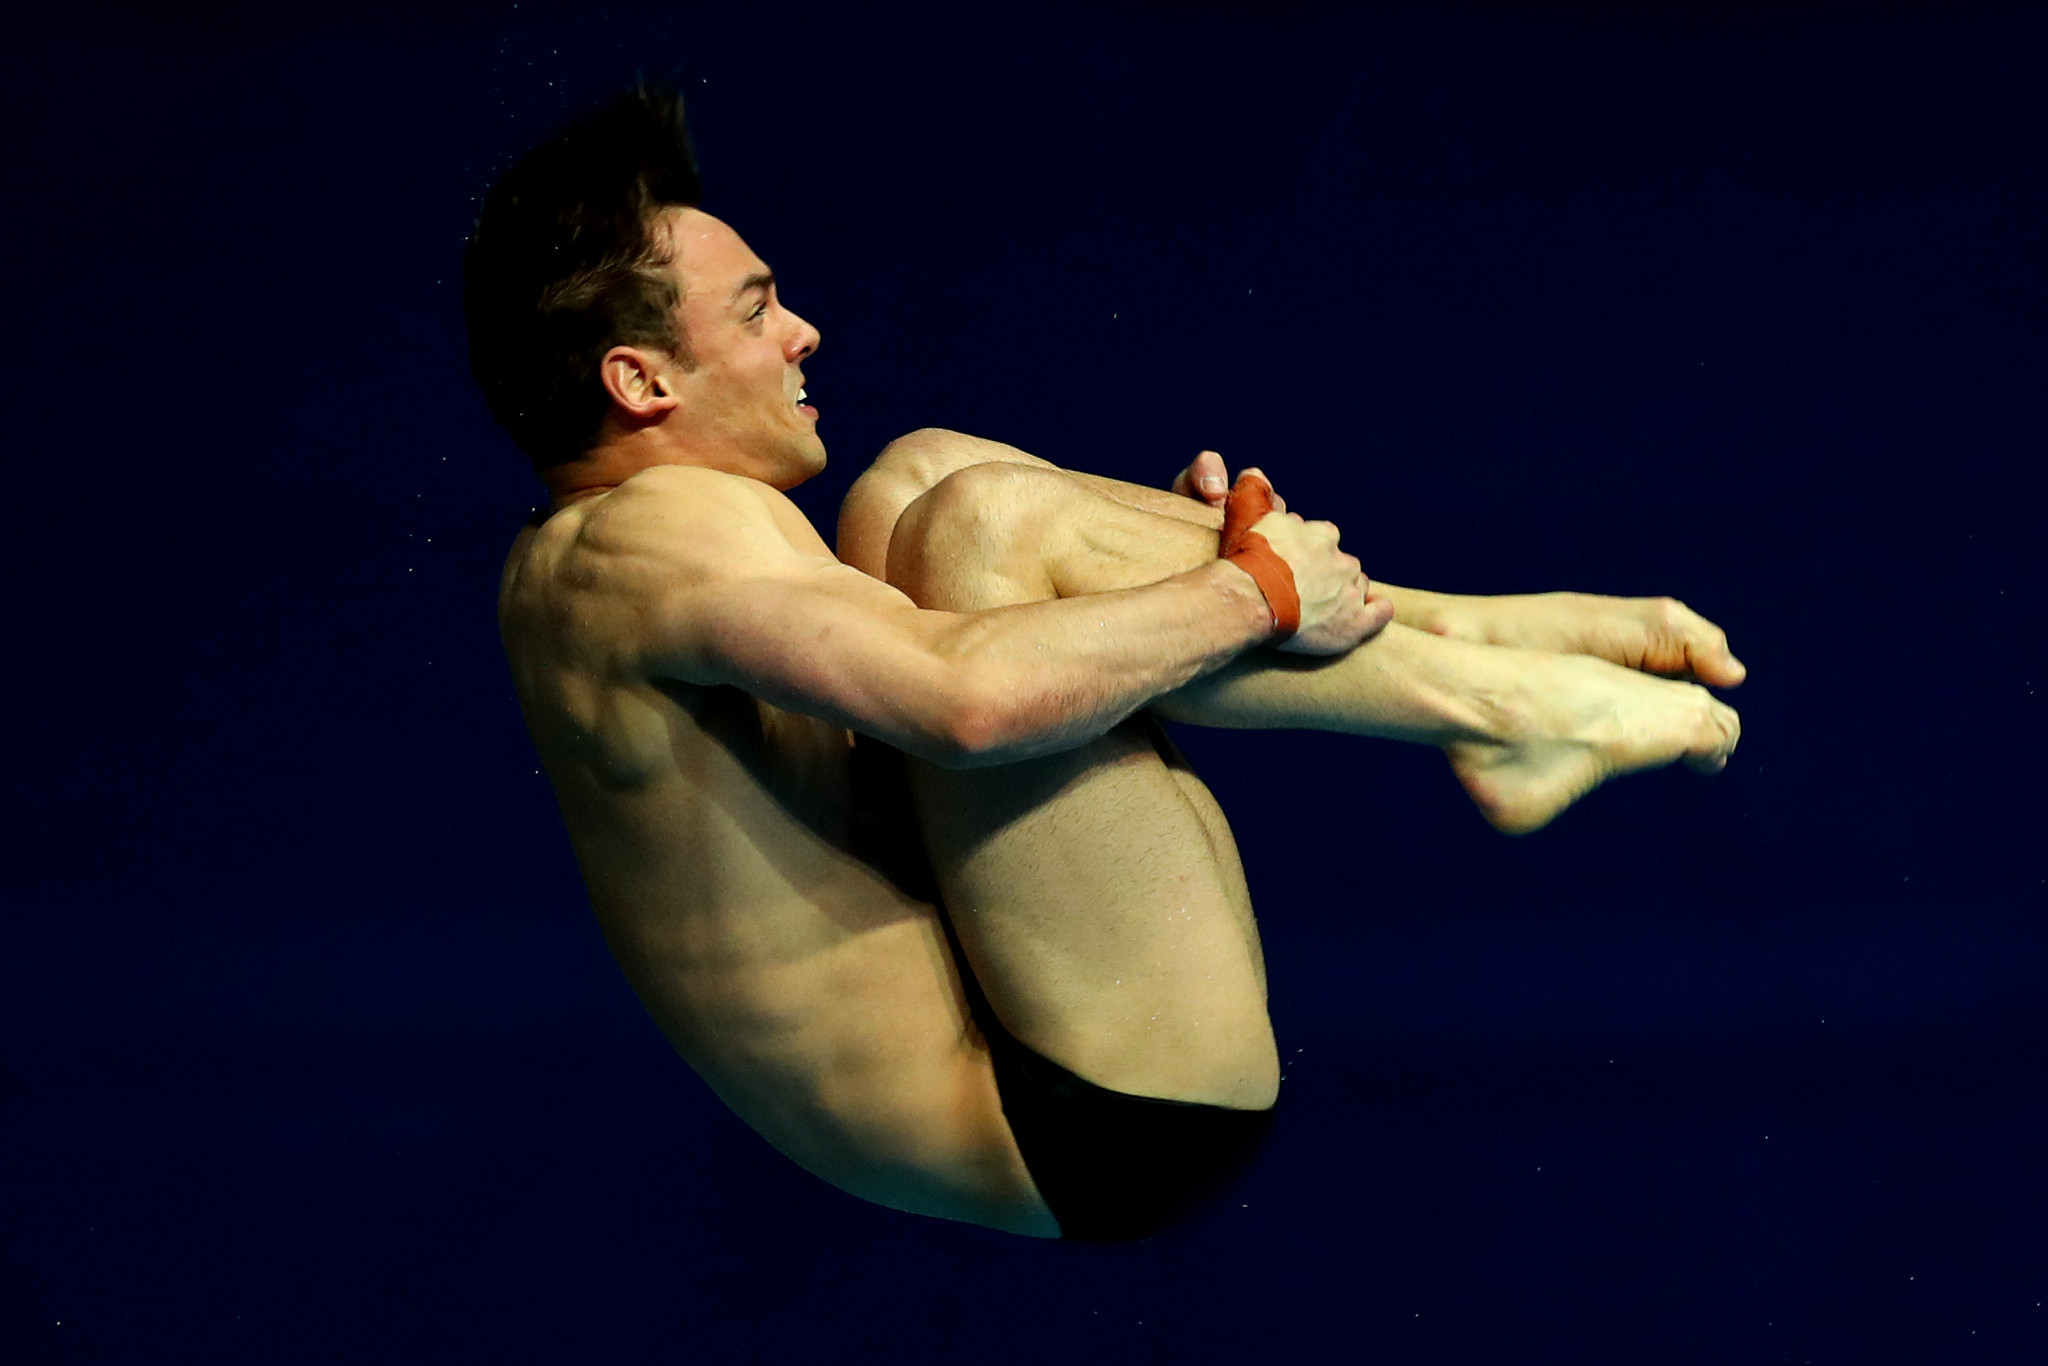 British diver Tom Daley won World Championships bronze in the men's 10m synchro final alongside Matt Lee last month ©Getty Images